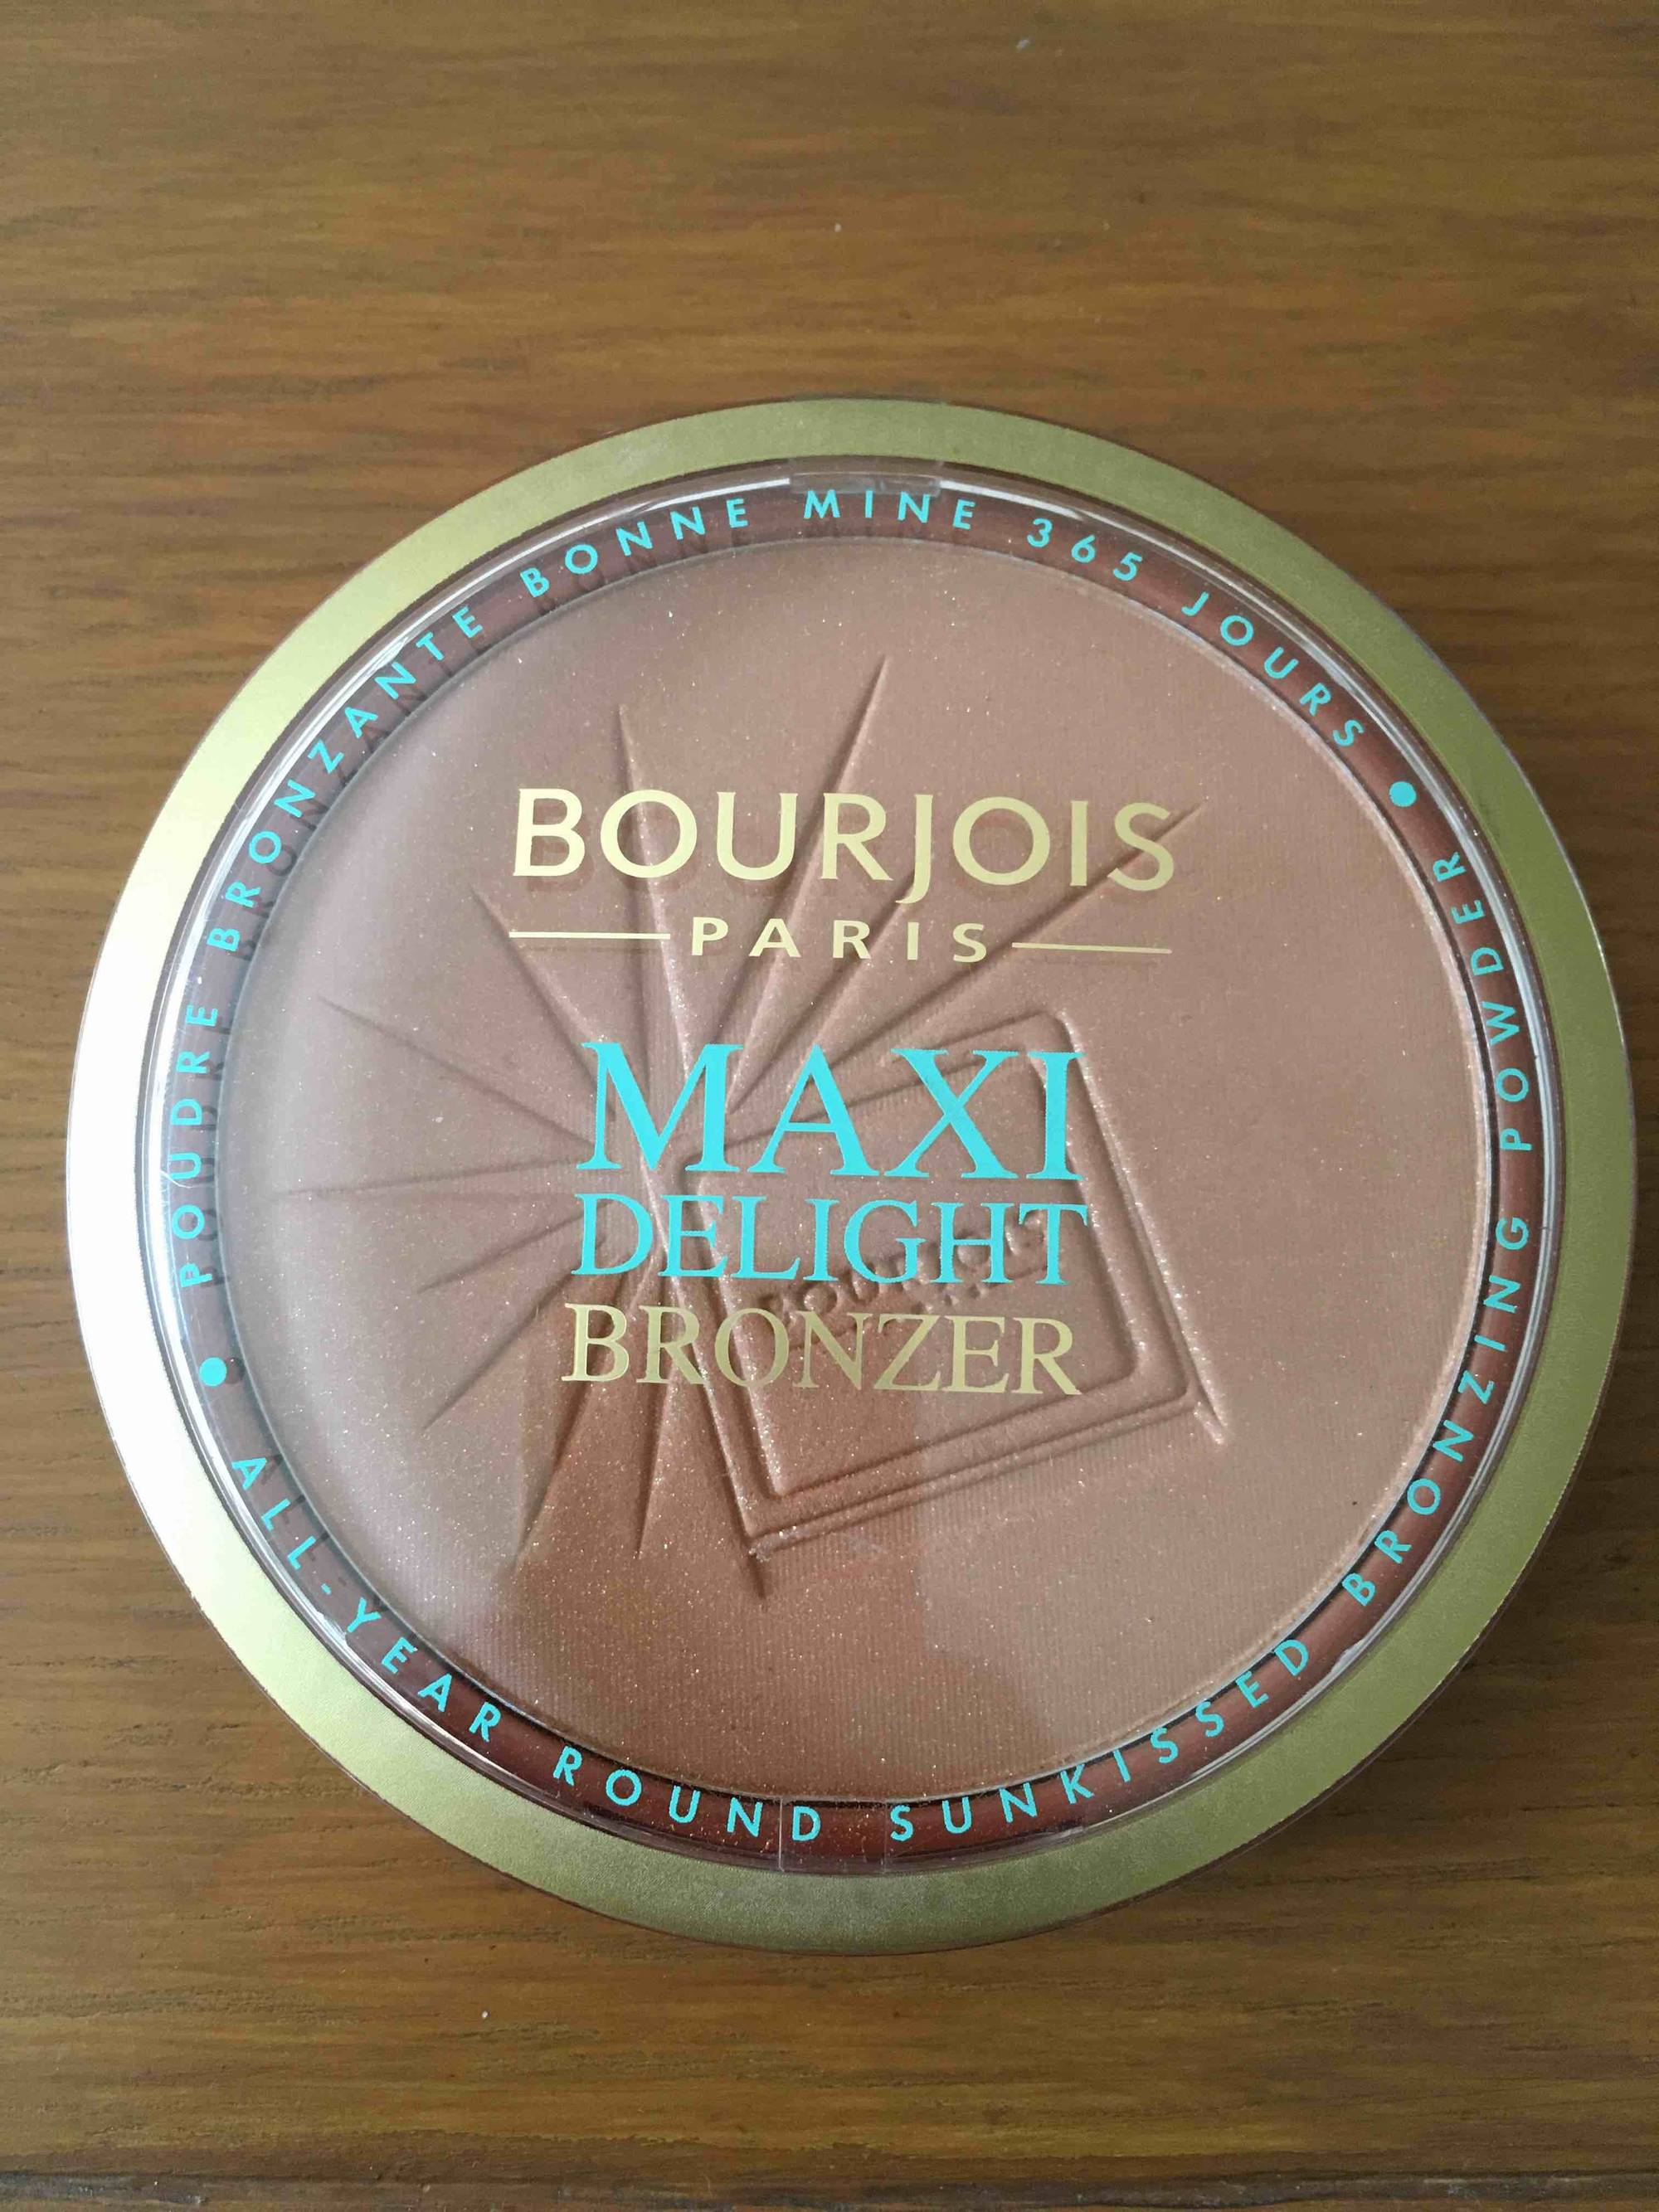 BOURJOIS - Maxi delight bronzer - Poudre bronzante bonne mine